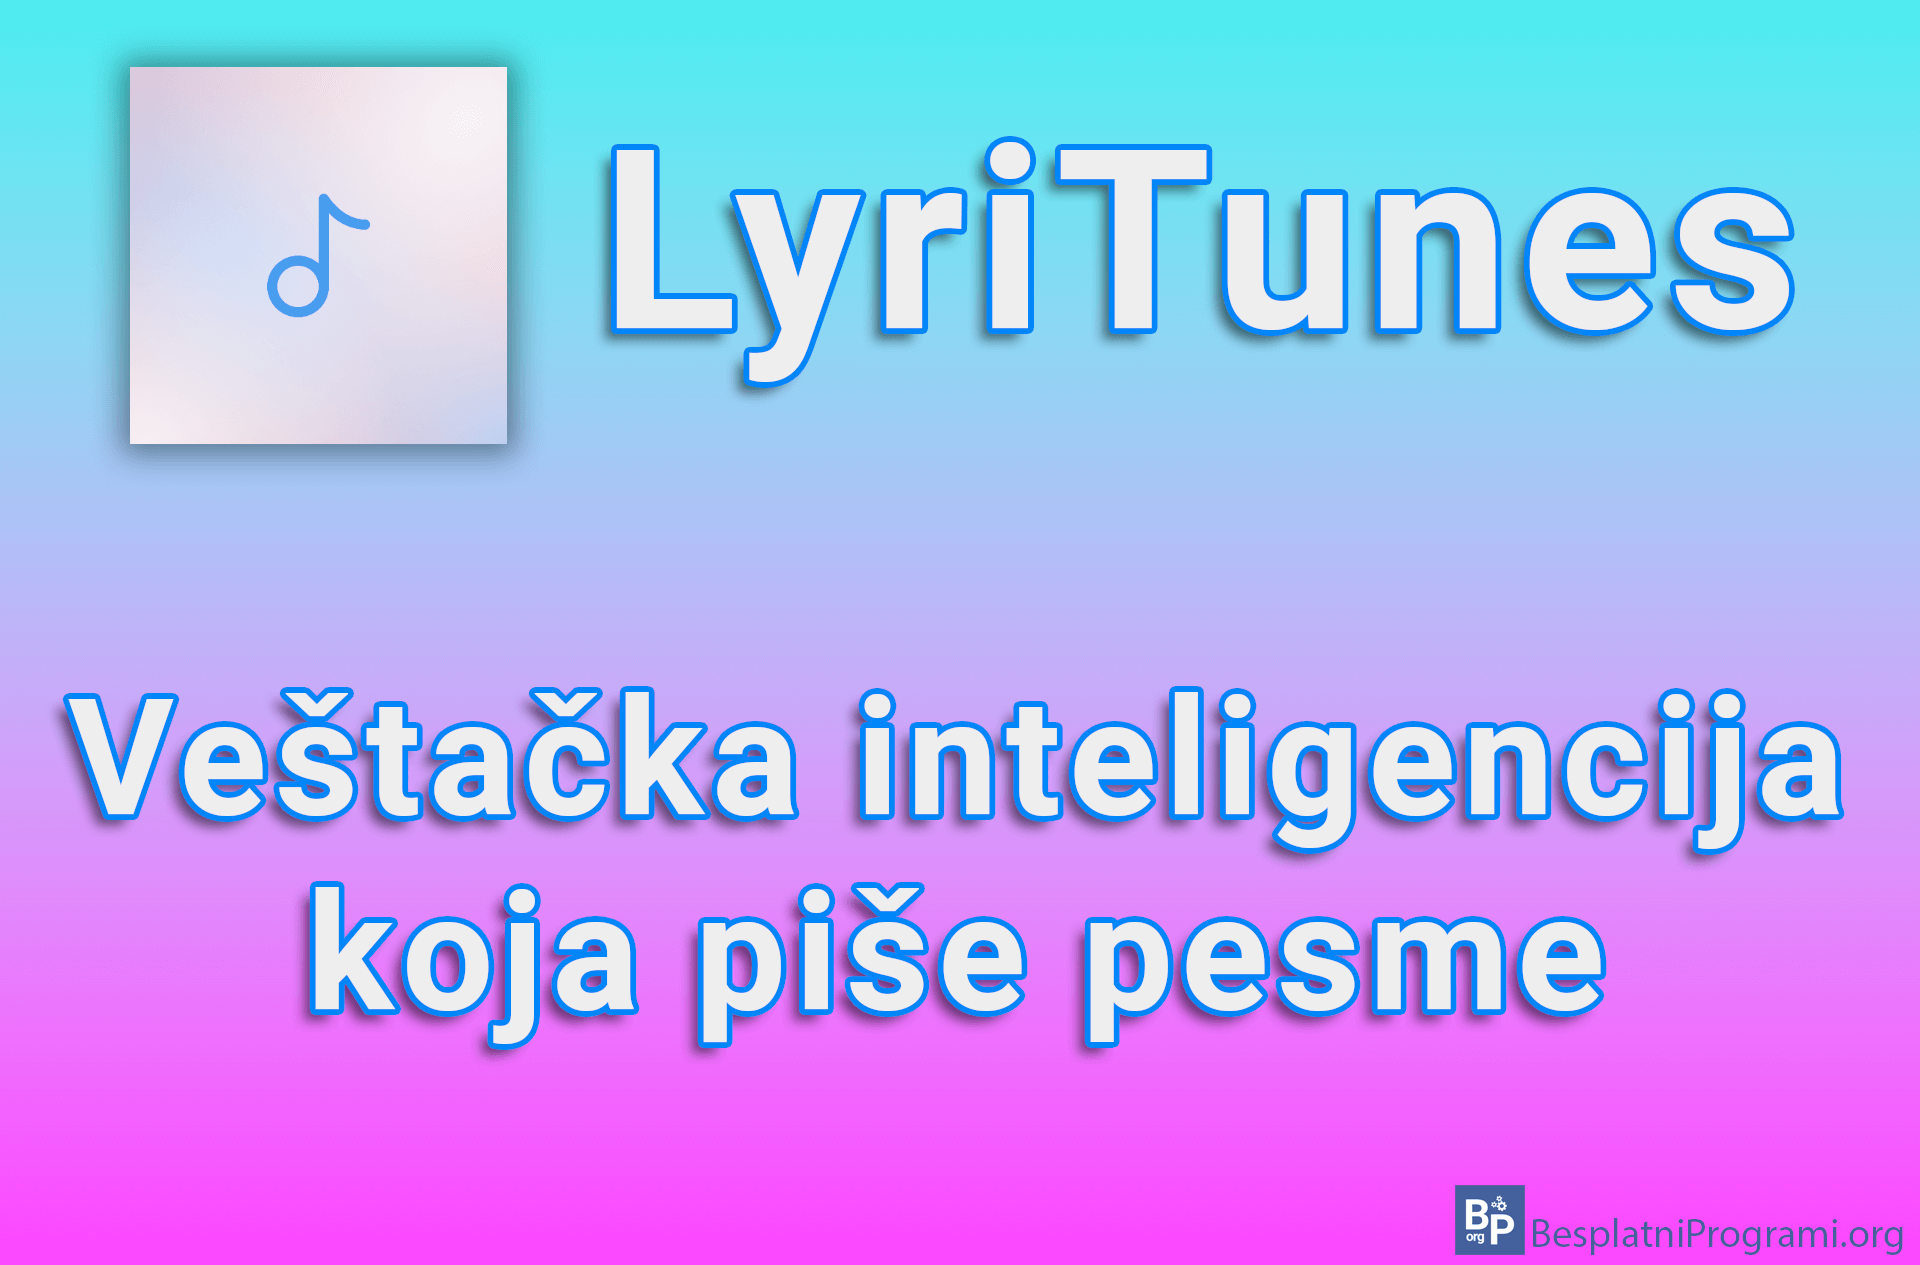 LyriTunes - Veštačka inteligencija koja piše pesme